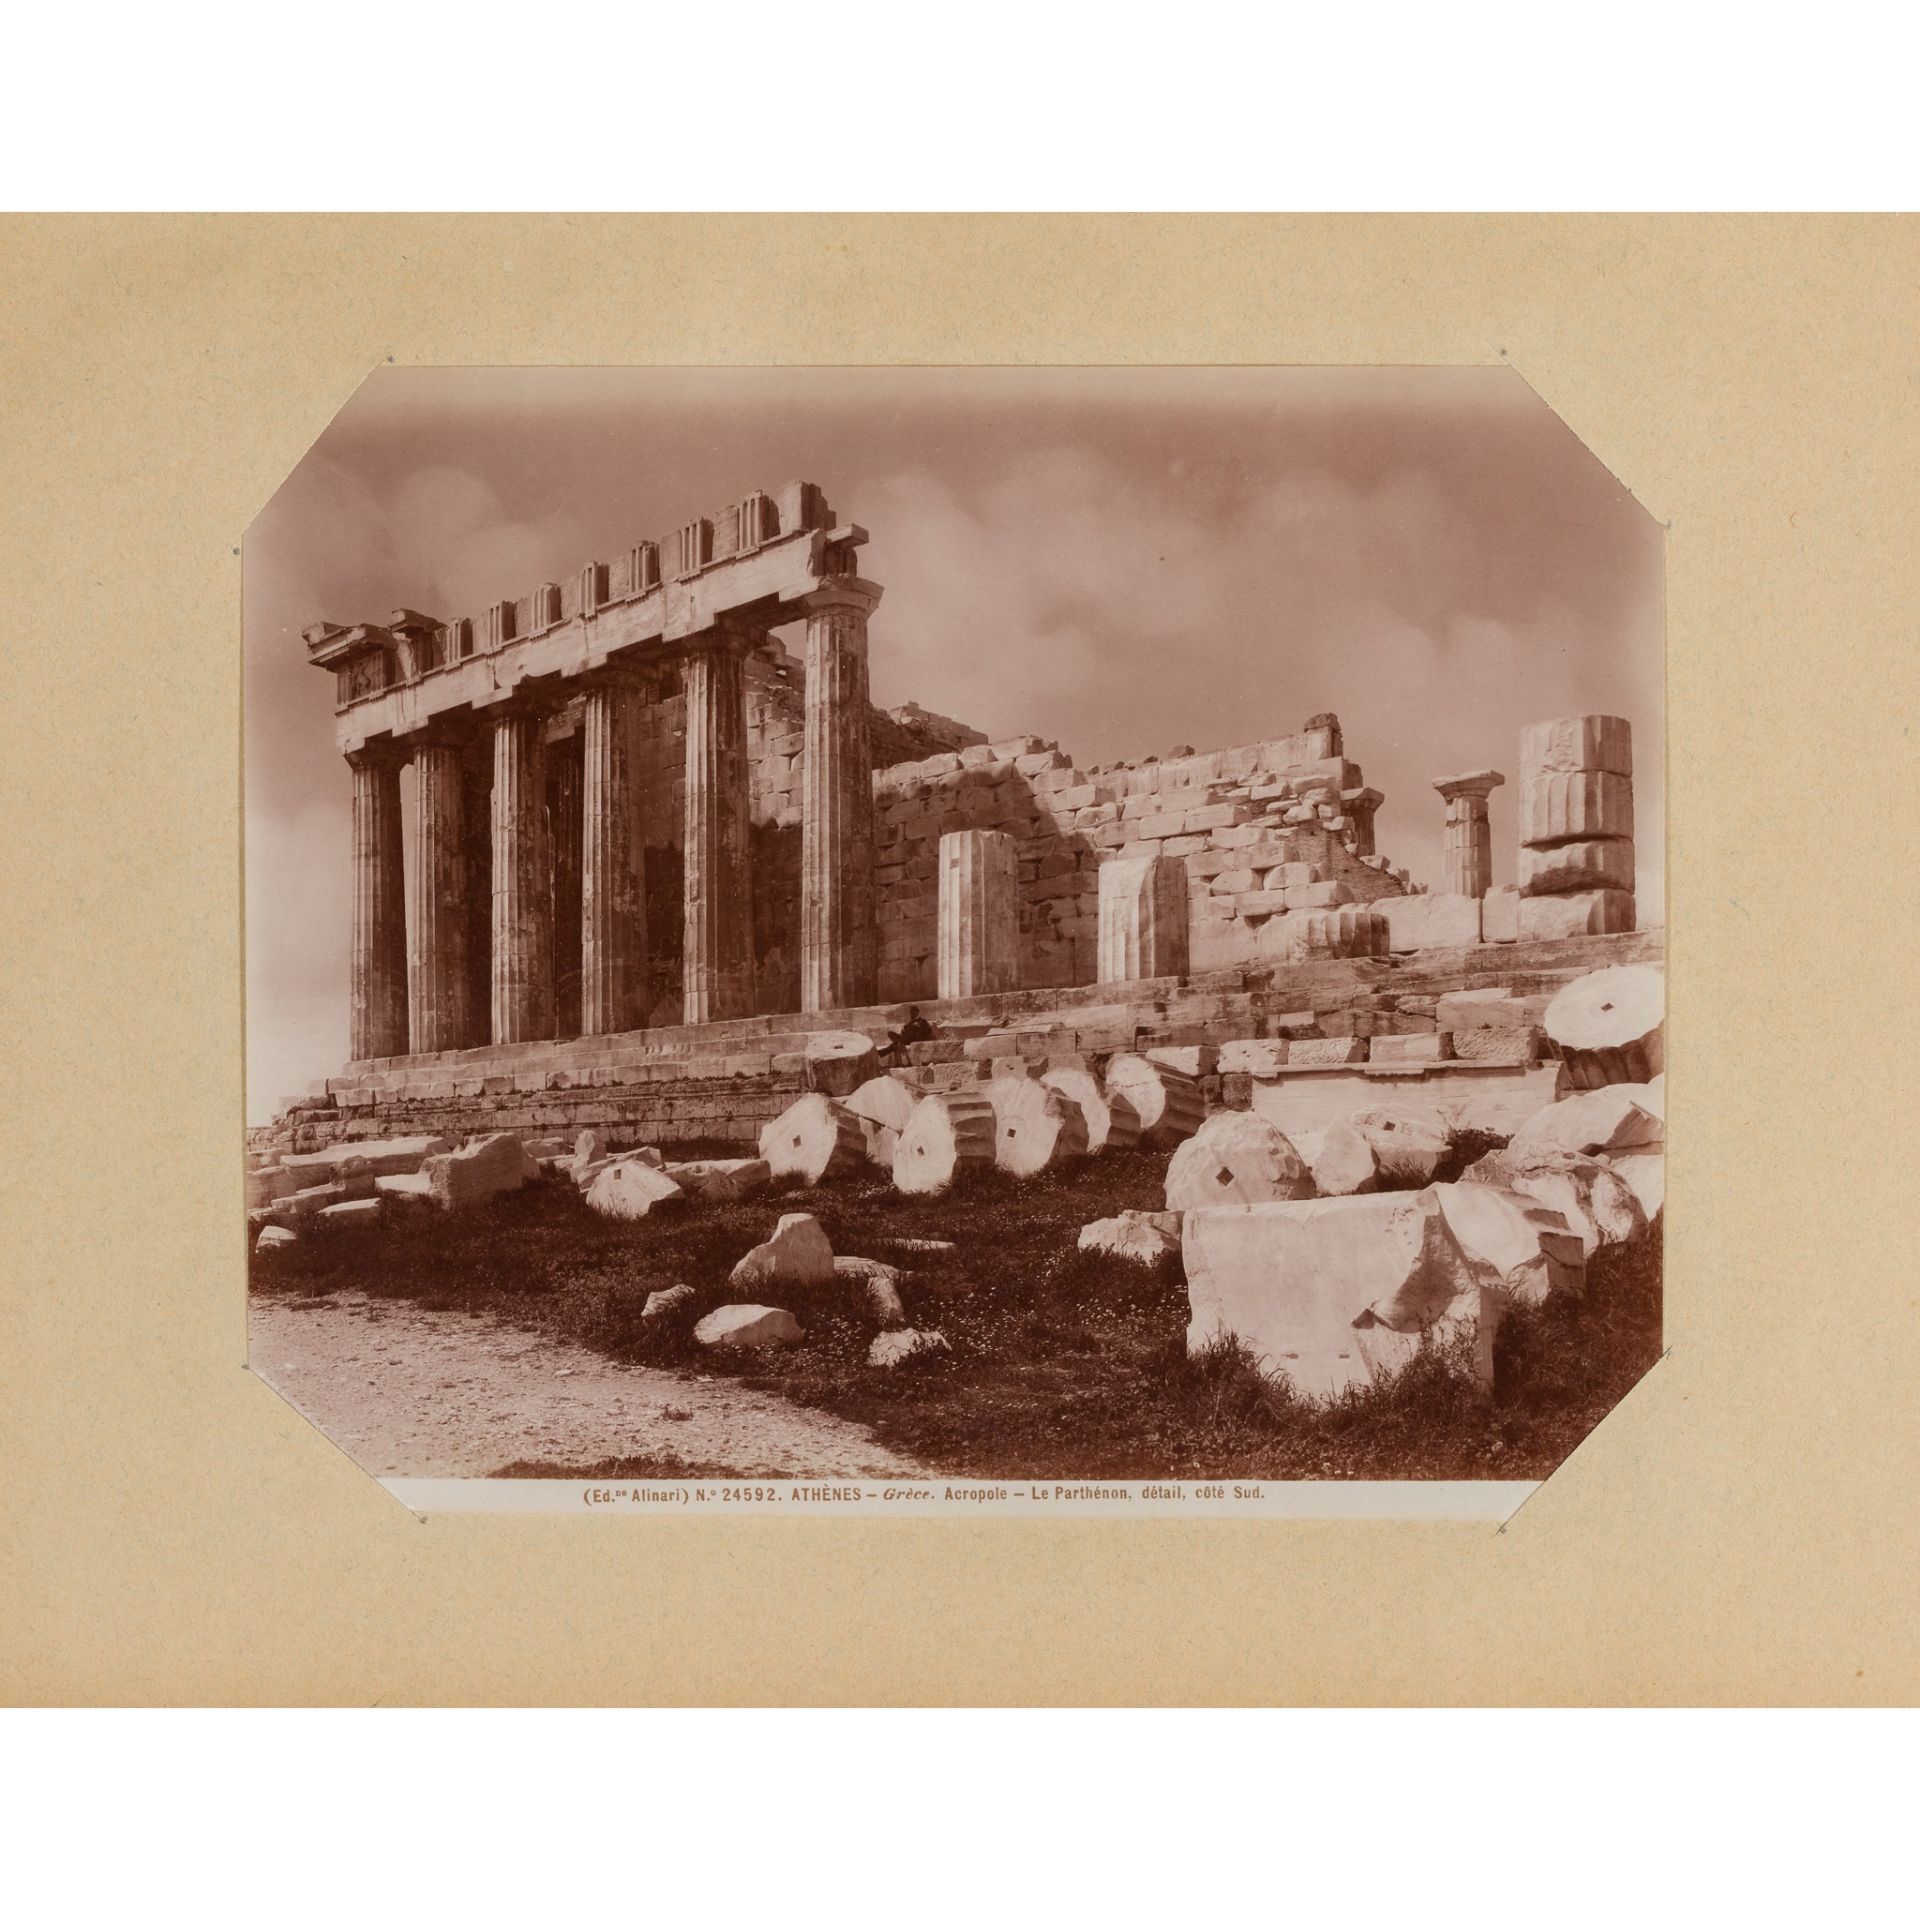 Greece, Phototographs Album comprising